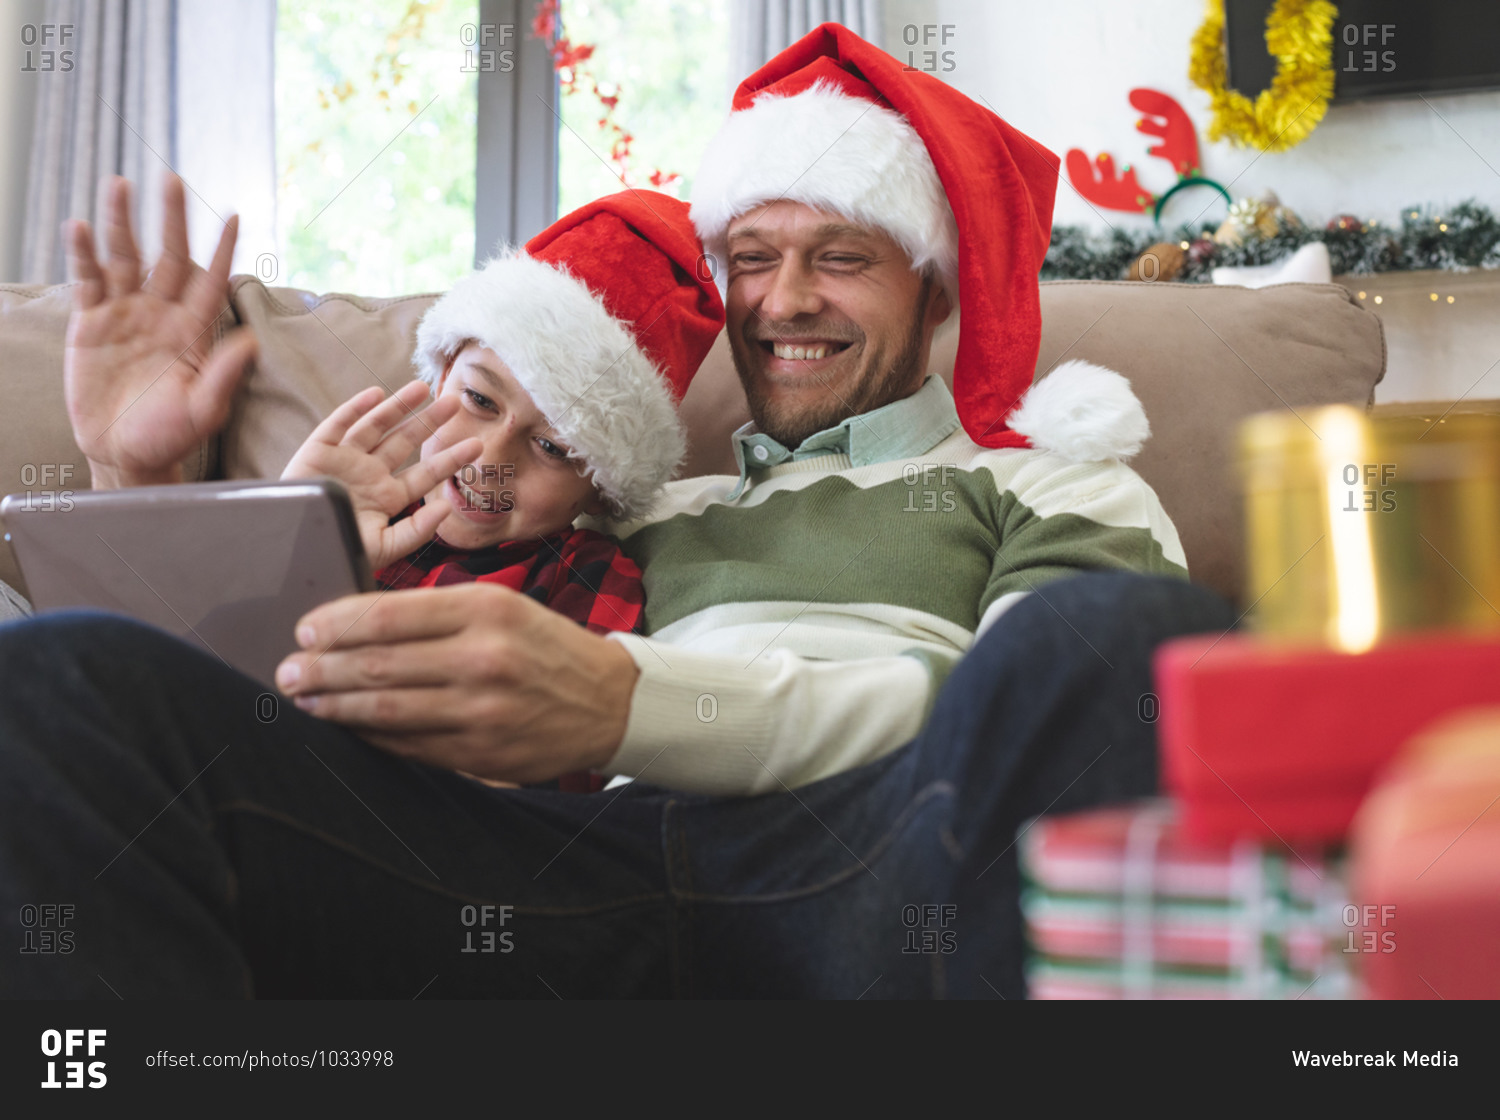 Caucasian man at home with his son at Christmas, wearing Santa hats sitting on sofa in living room, using digital tablet, waving. Social distancing during Covid 19 Coronavirus quarantine lockdown.